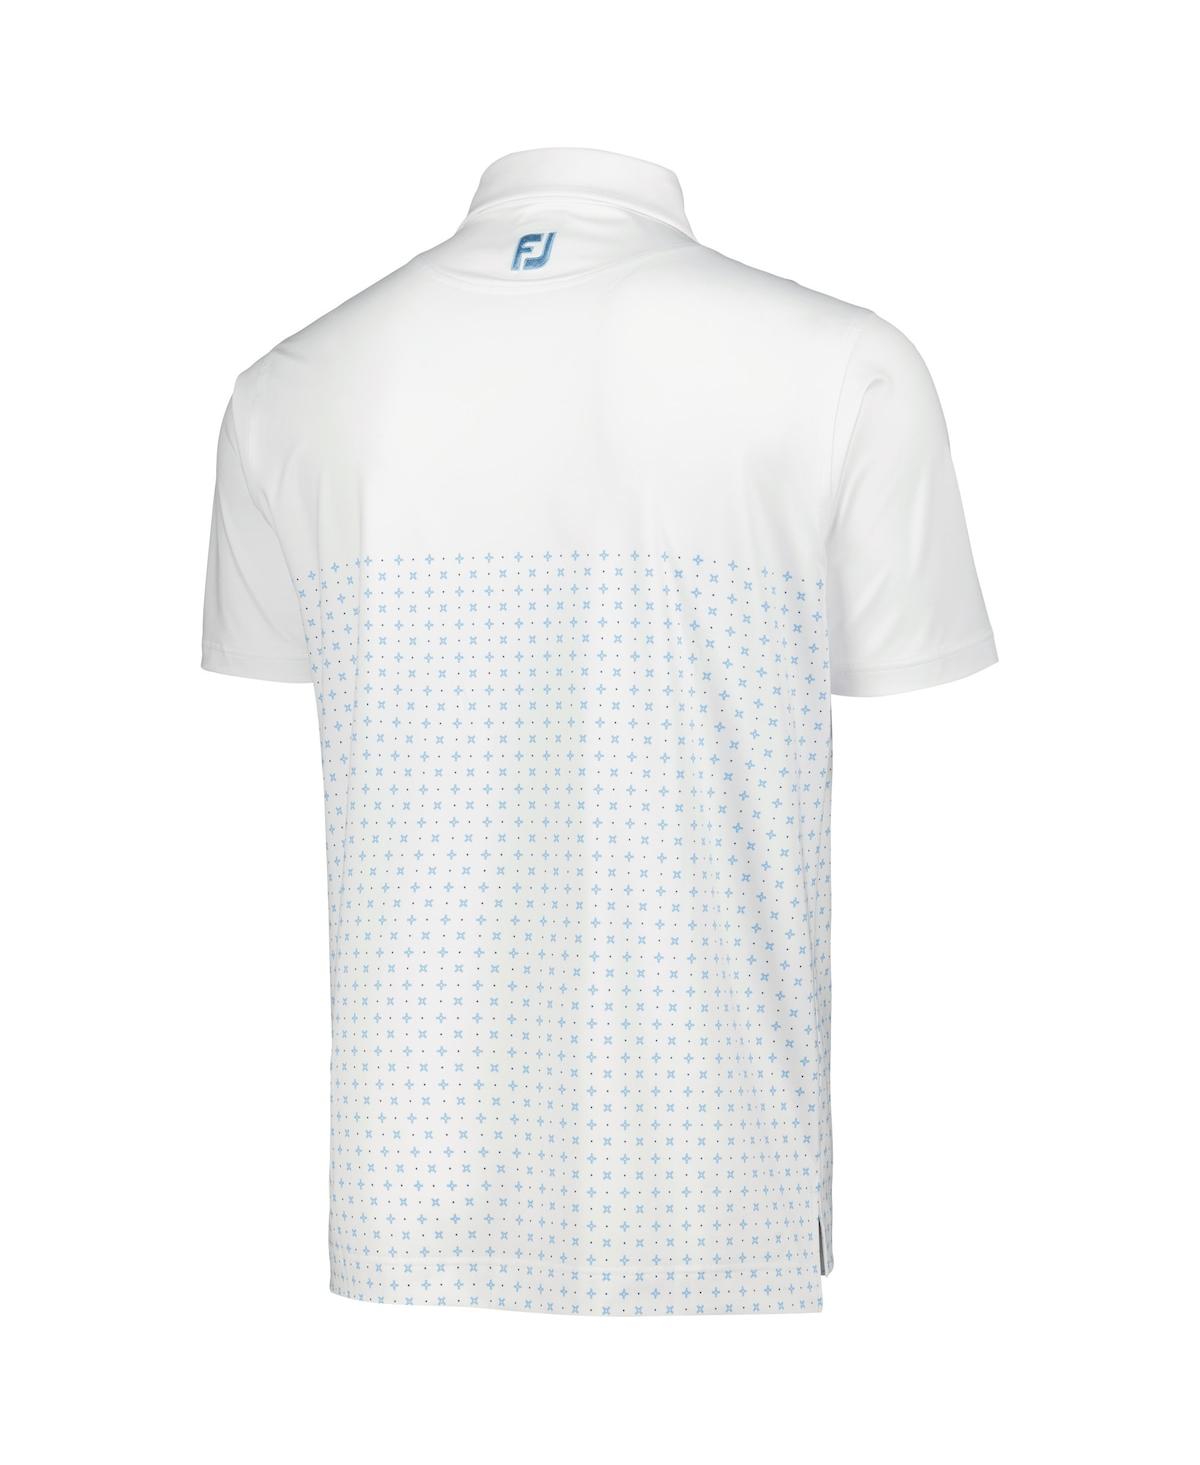 Shop Footjoy Men's  White Arnold Palmer Invitational Engineered Foulard Lisle Polo Shirt